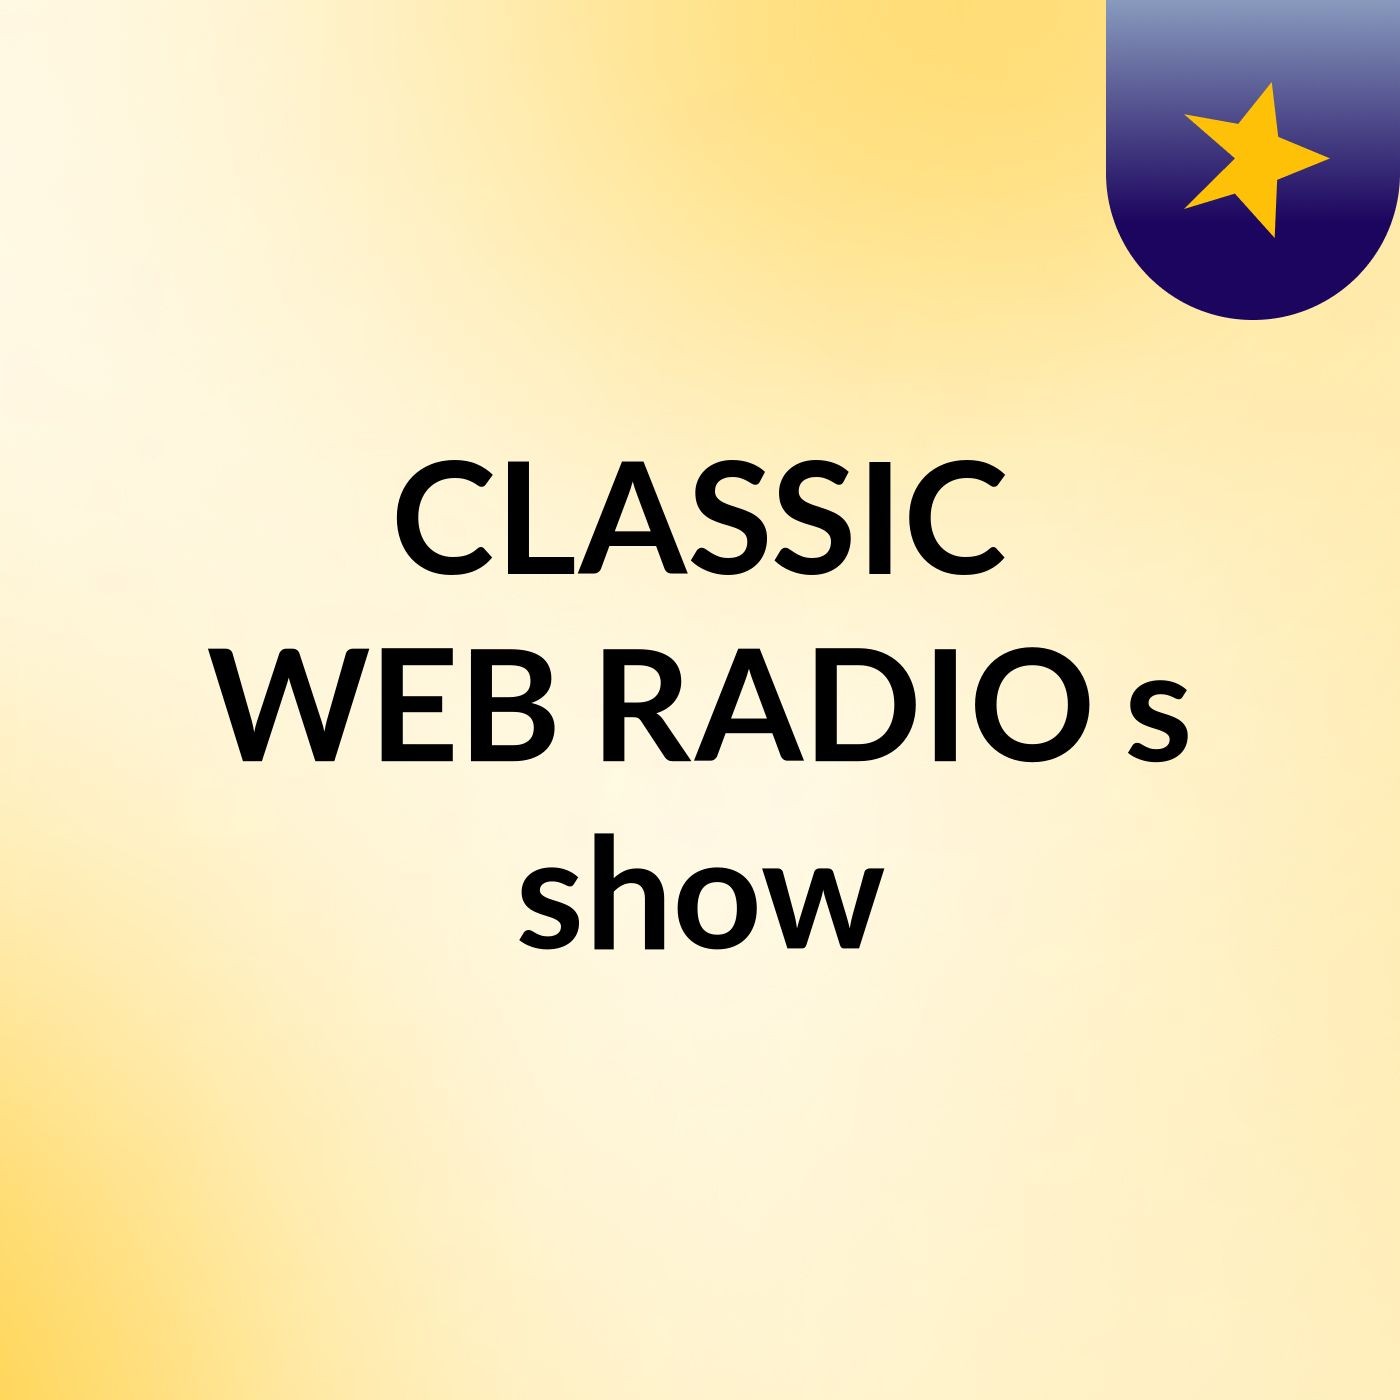 CLASSIC WEB RADIO's show